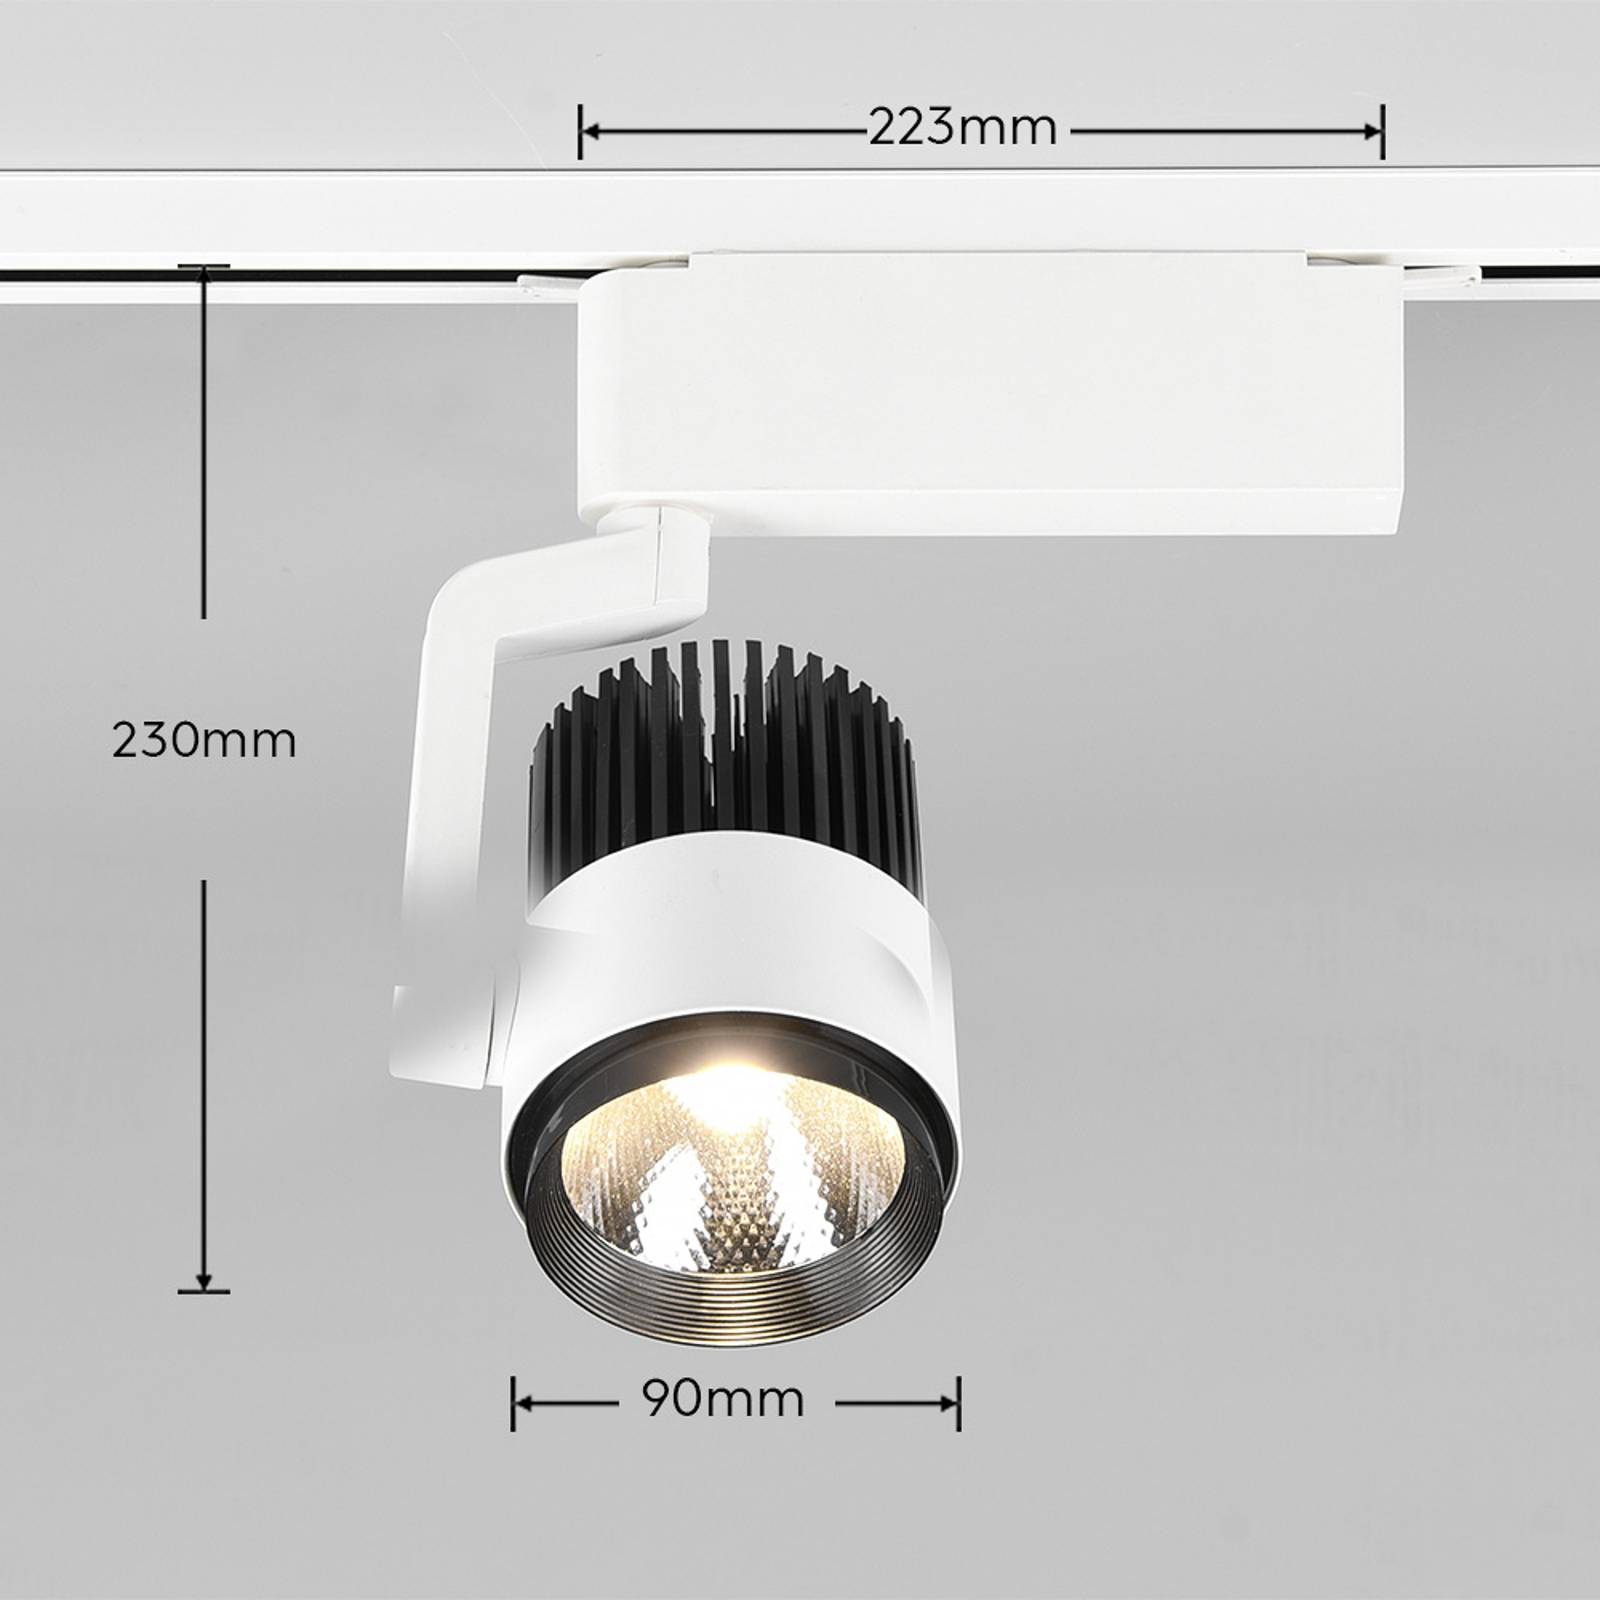 trio lighting spot led radiator duoline, cct, blanc mat